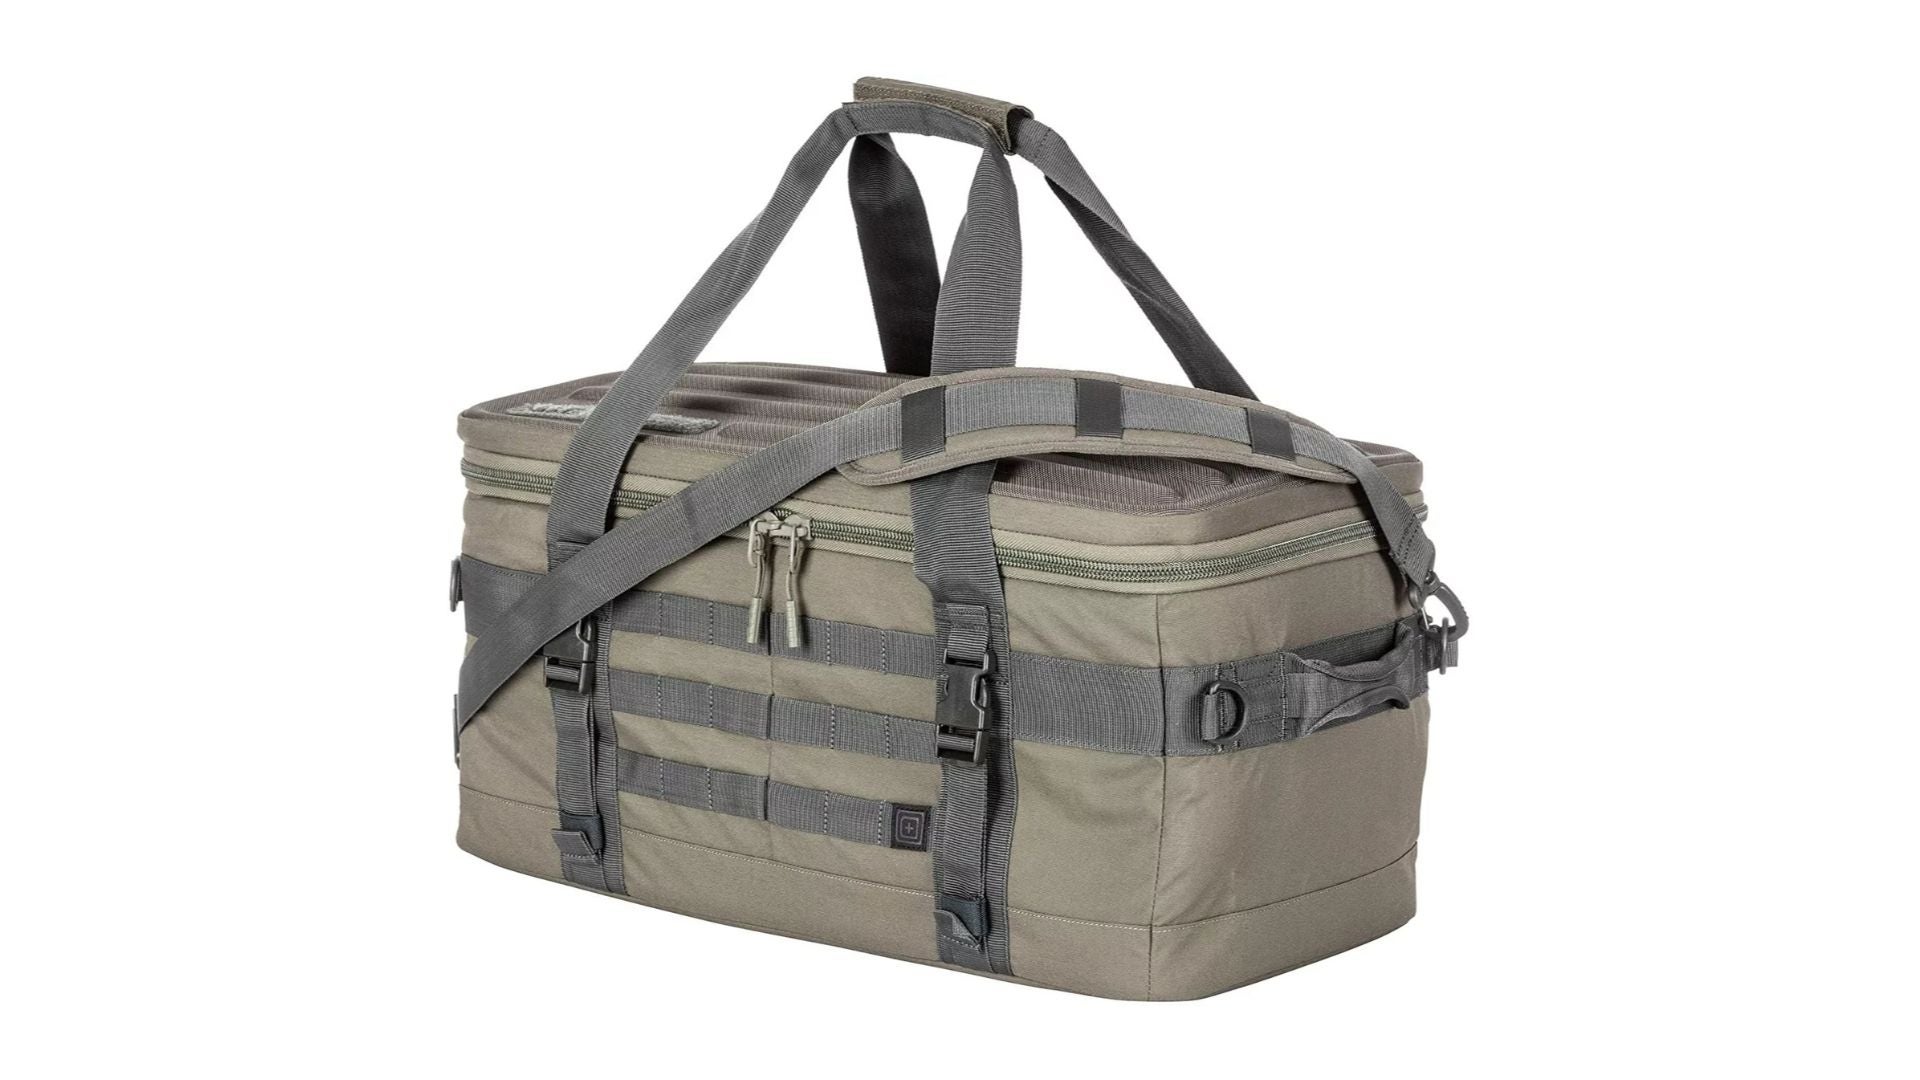 Modern Warrior Range Bag 20" Hunting Supplies Shooting Gear Bag Handgun Case 